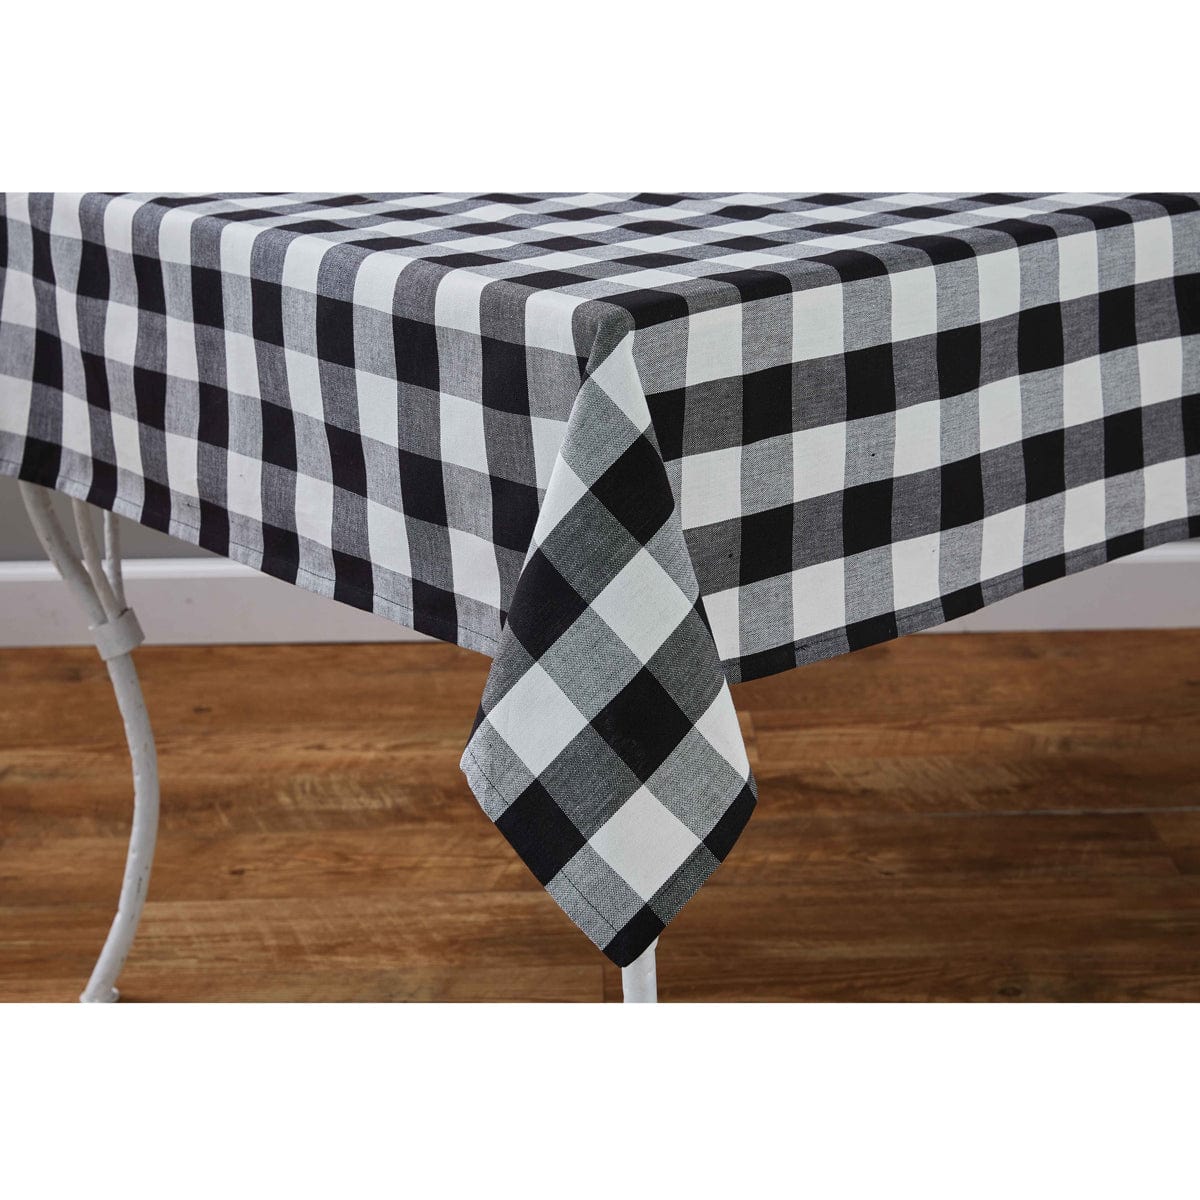 Wicklow Check in Black &amp; Cream Tablecloth 54&quot; x 54&quot; Square-Park Designs-The Village Merchant